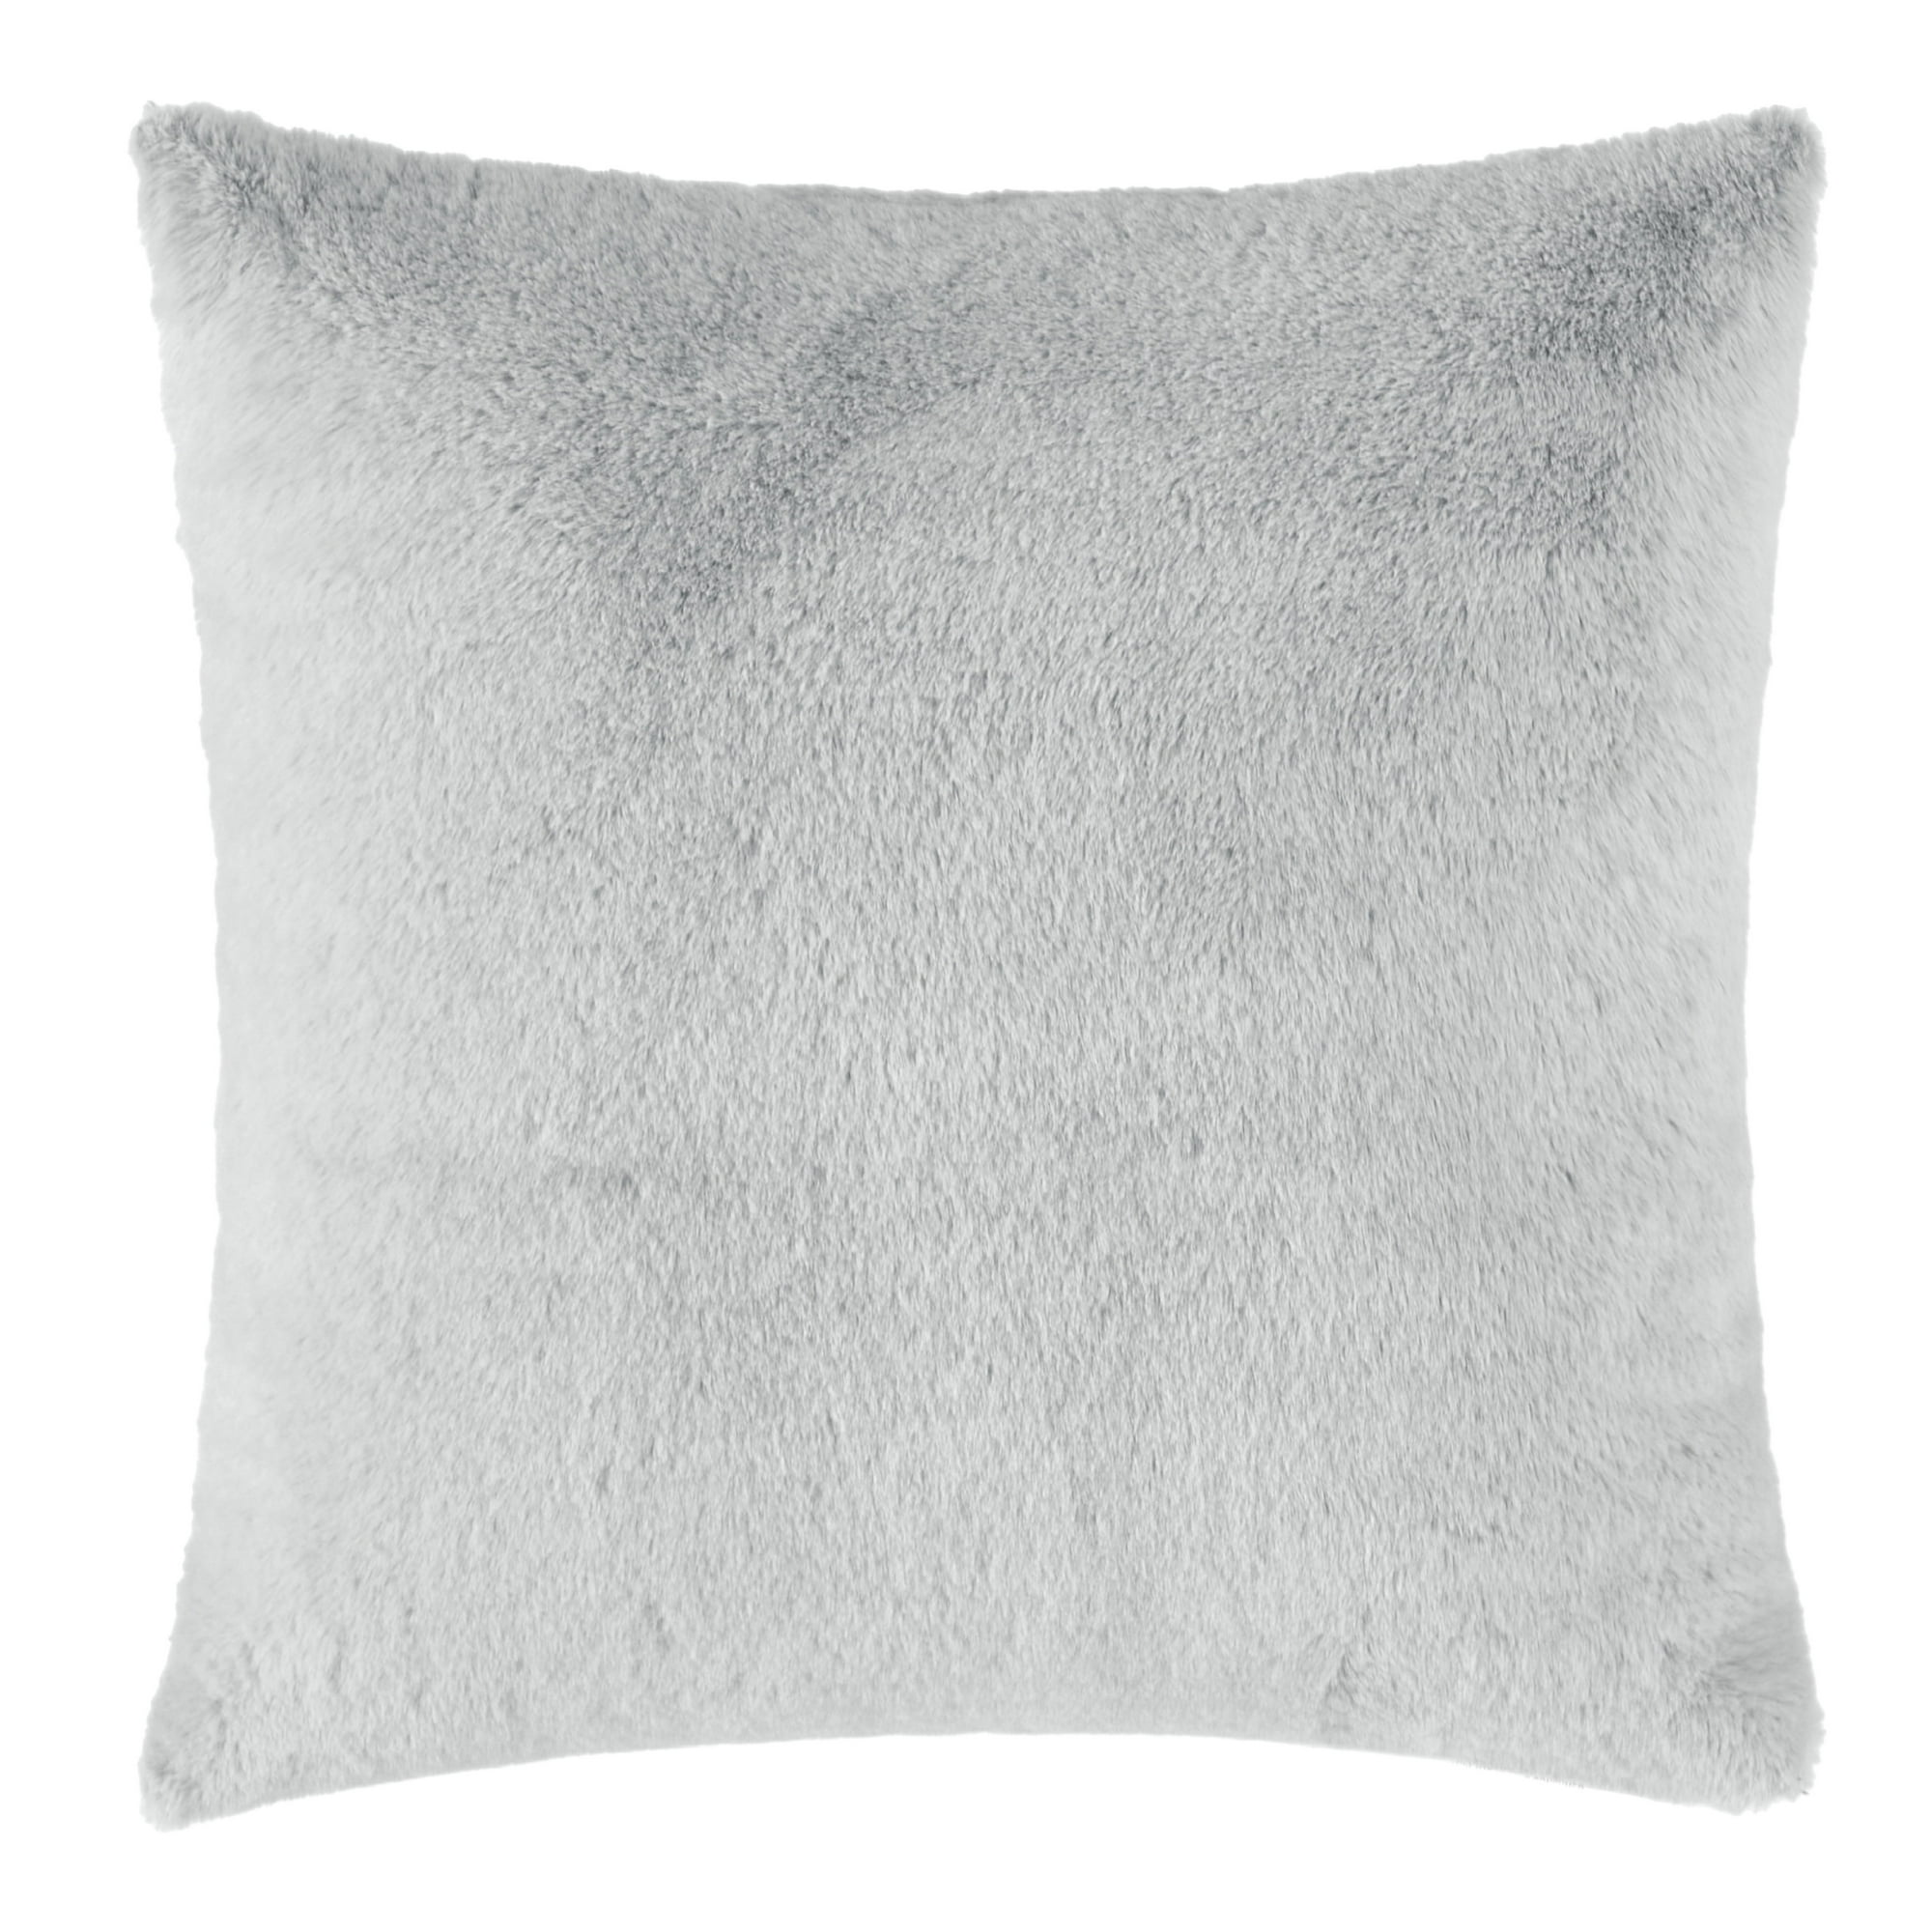 Mainstays Tip Dye Faux Fur Decorative Pillow, Grey, 20" x 20", 1 each